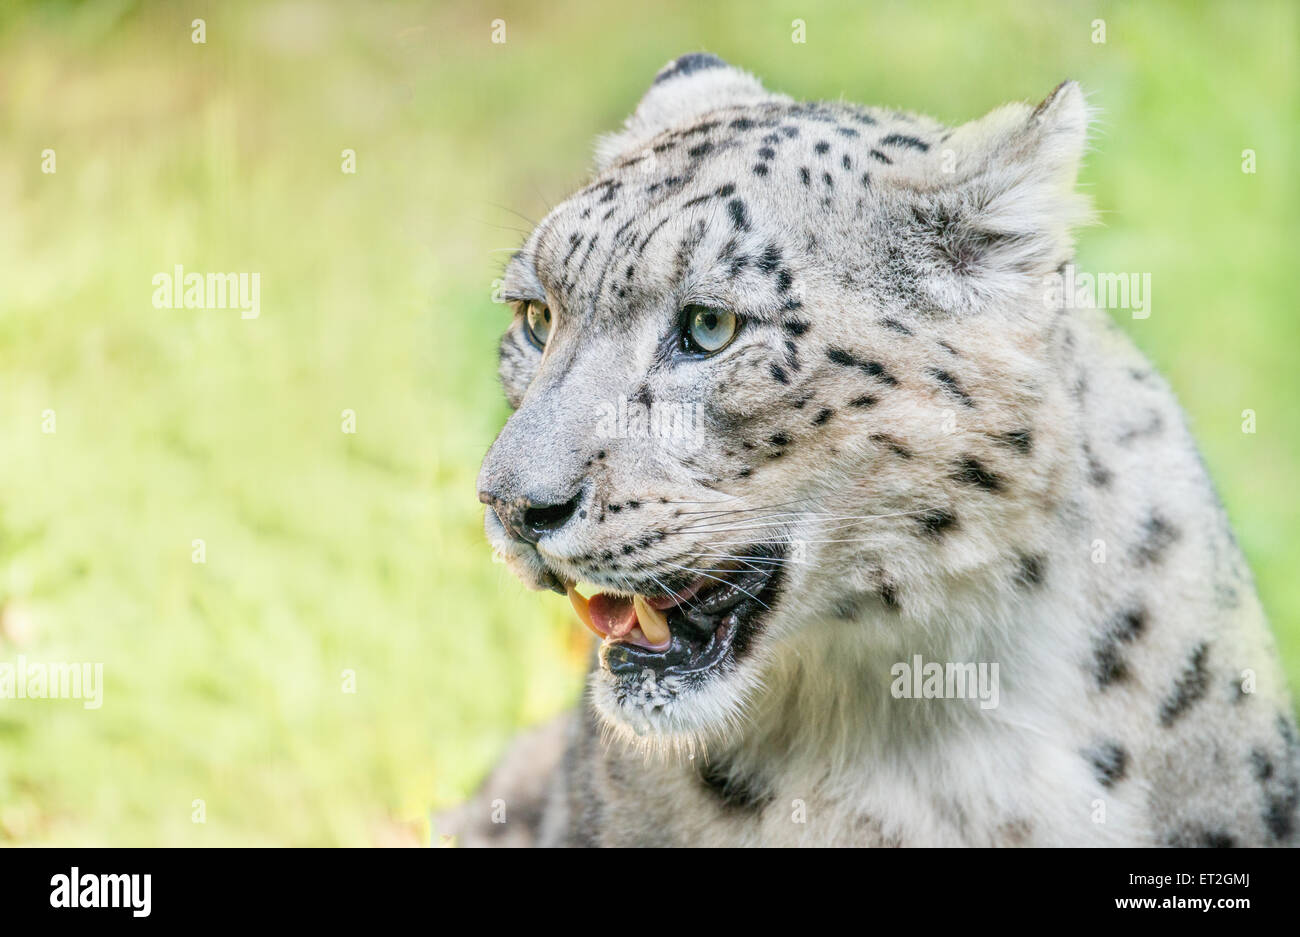 Snow leopard face close-up Stock Photo